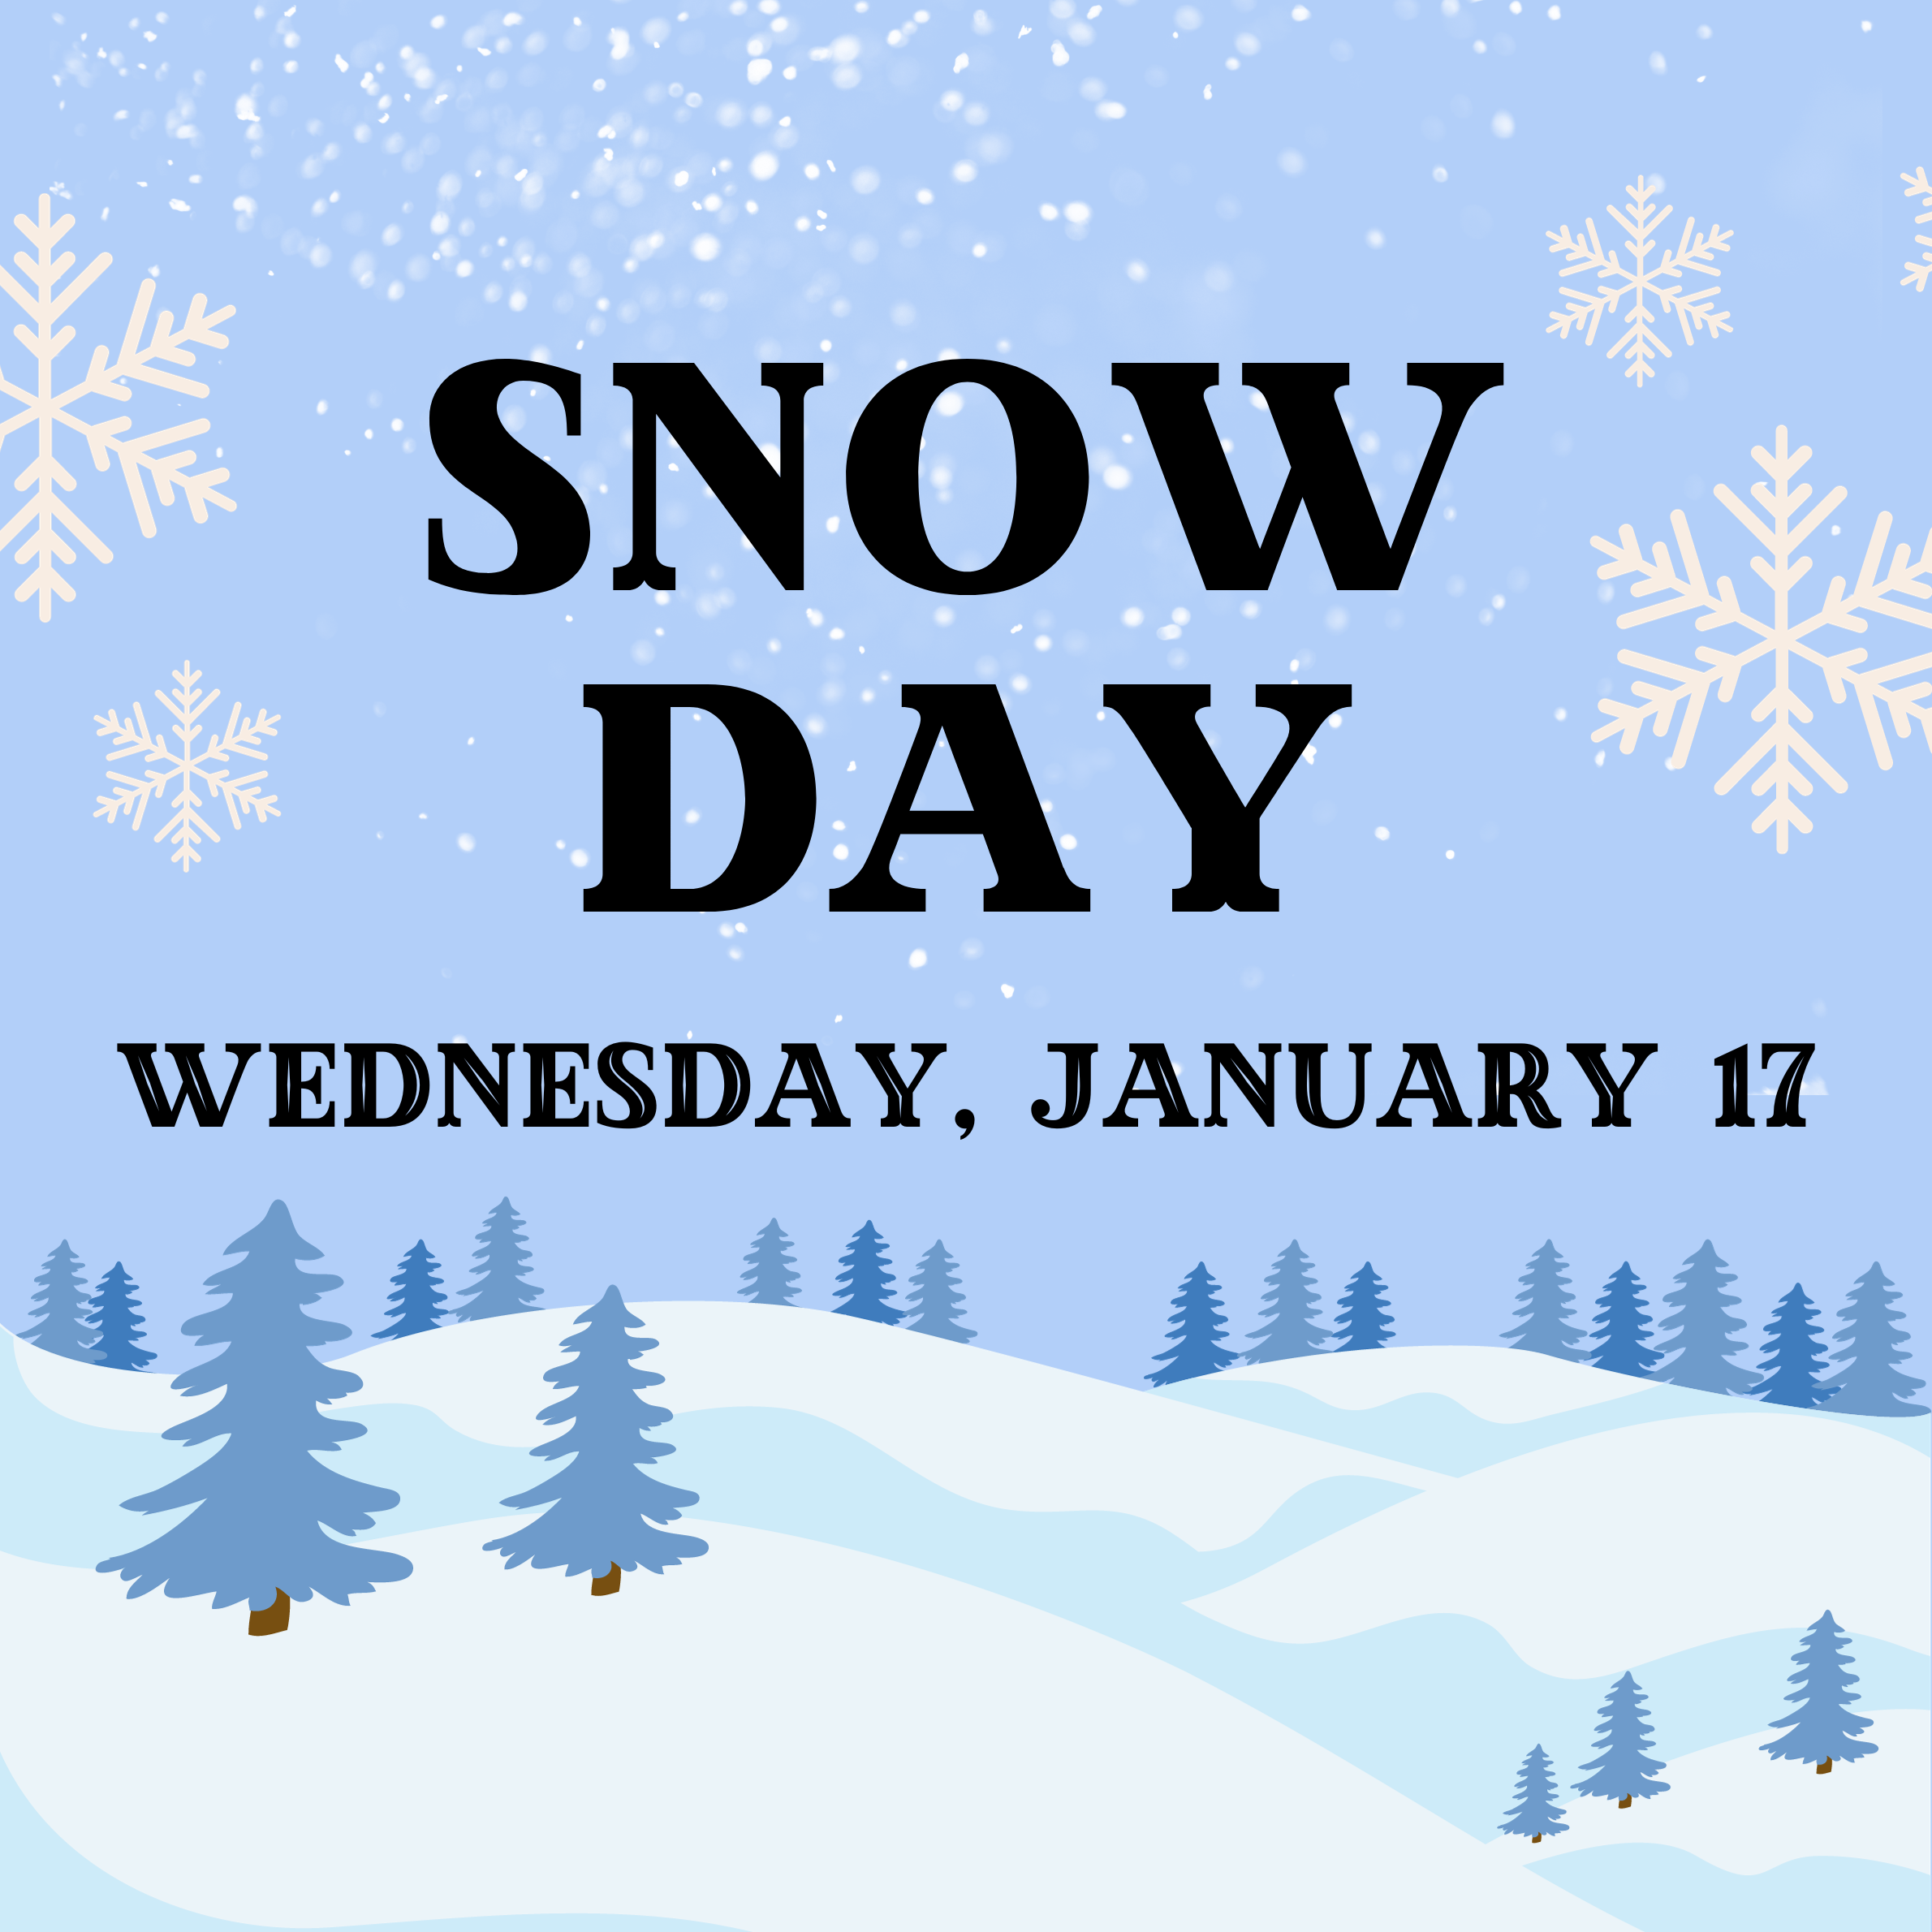 SNOW DAY - Wednesday, January 17